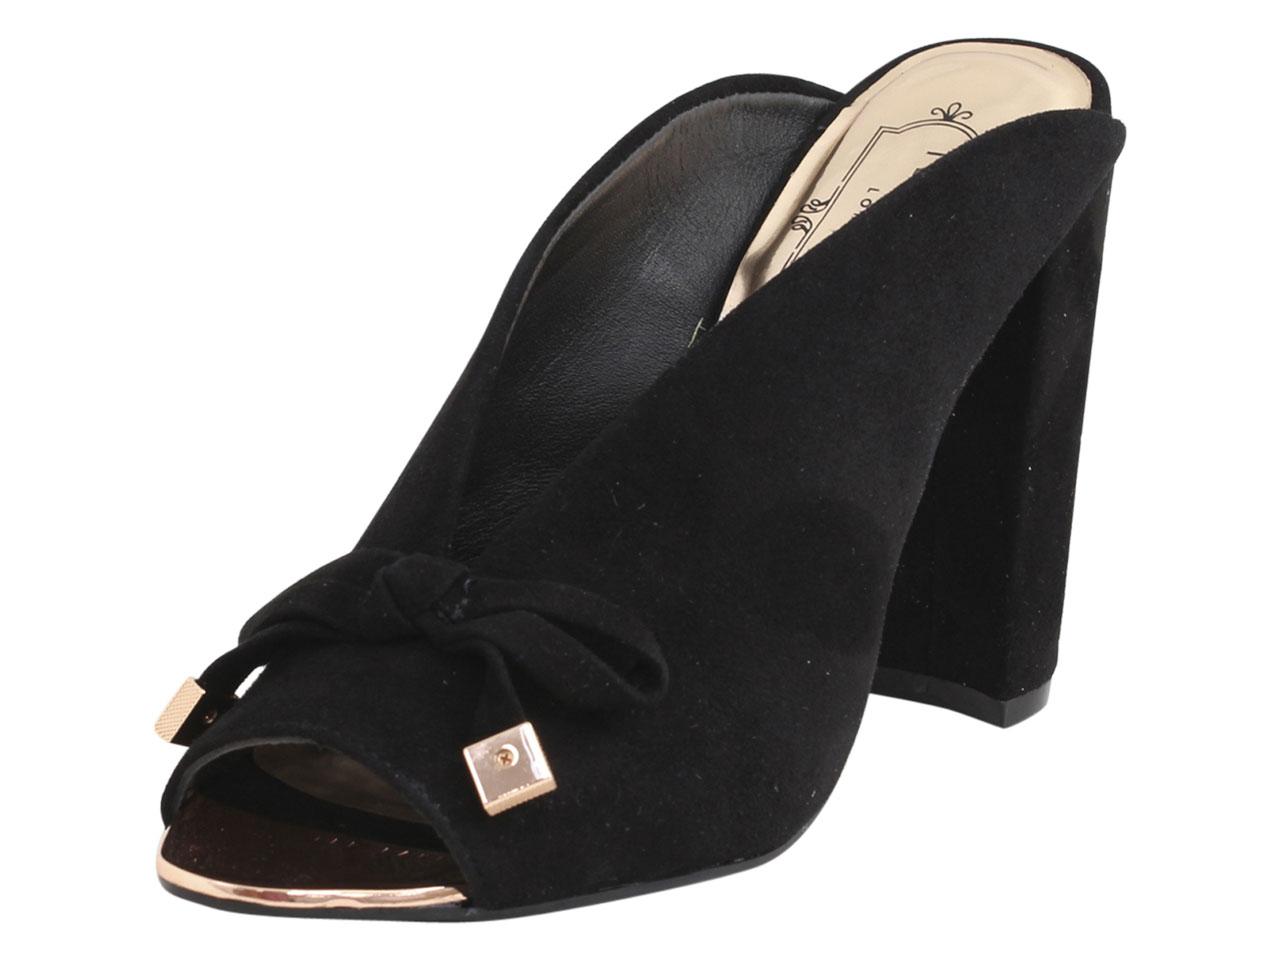 Ted Baker Women's Marinax Pumps Heels Shoes - Black - 6.5 B(M) US